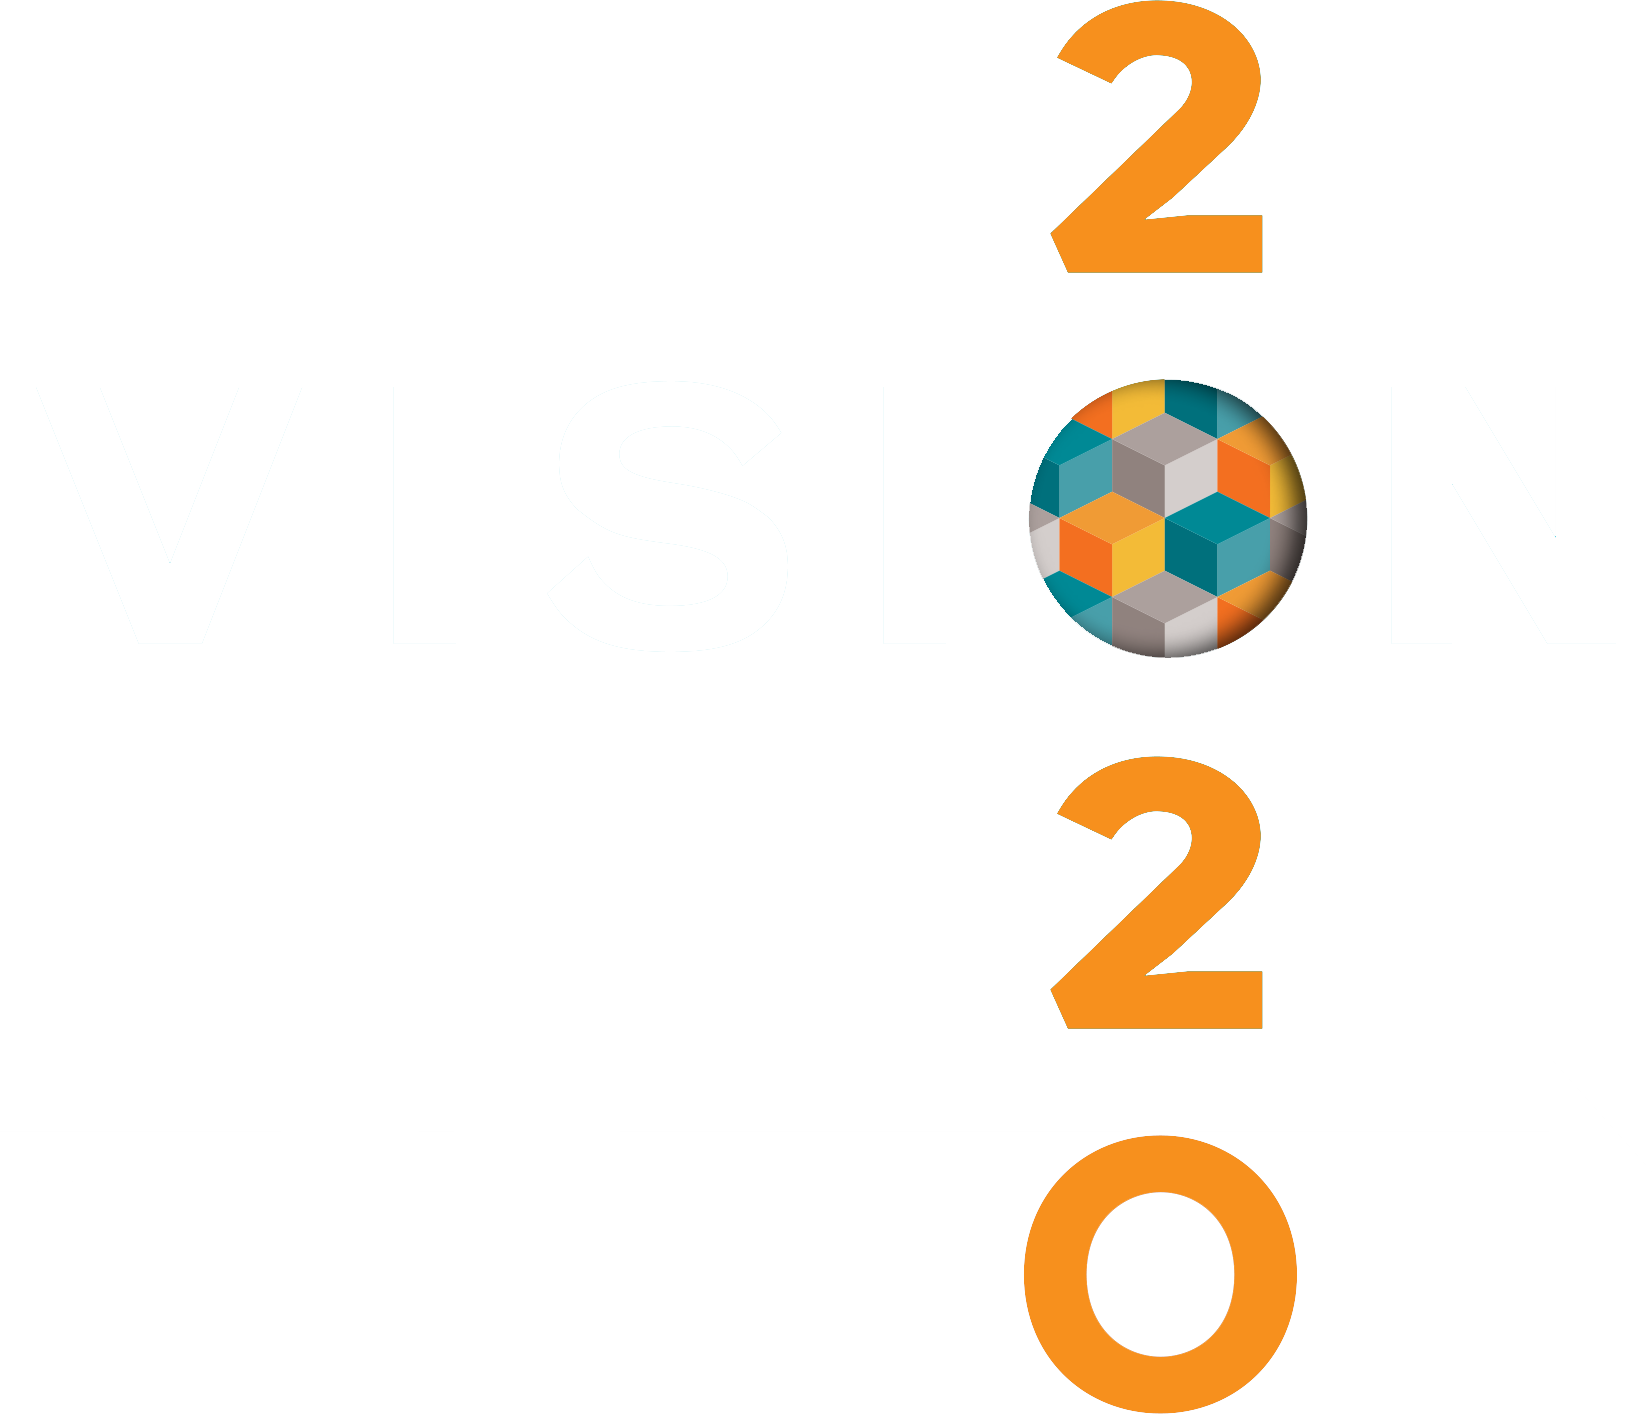 Vision 2020 Logo - Expanding Care (1652x1414)